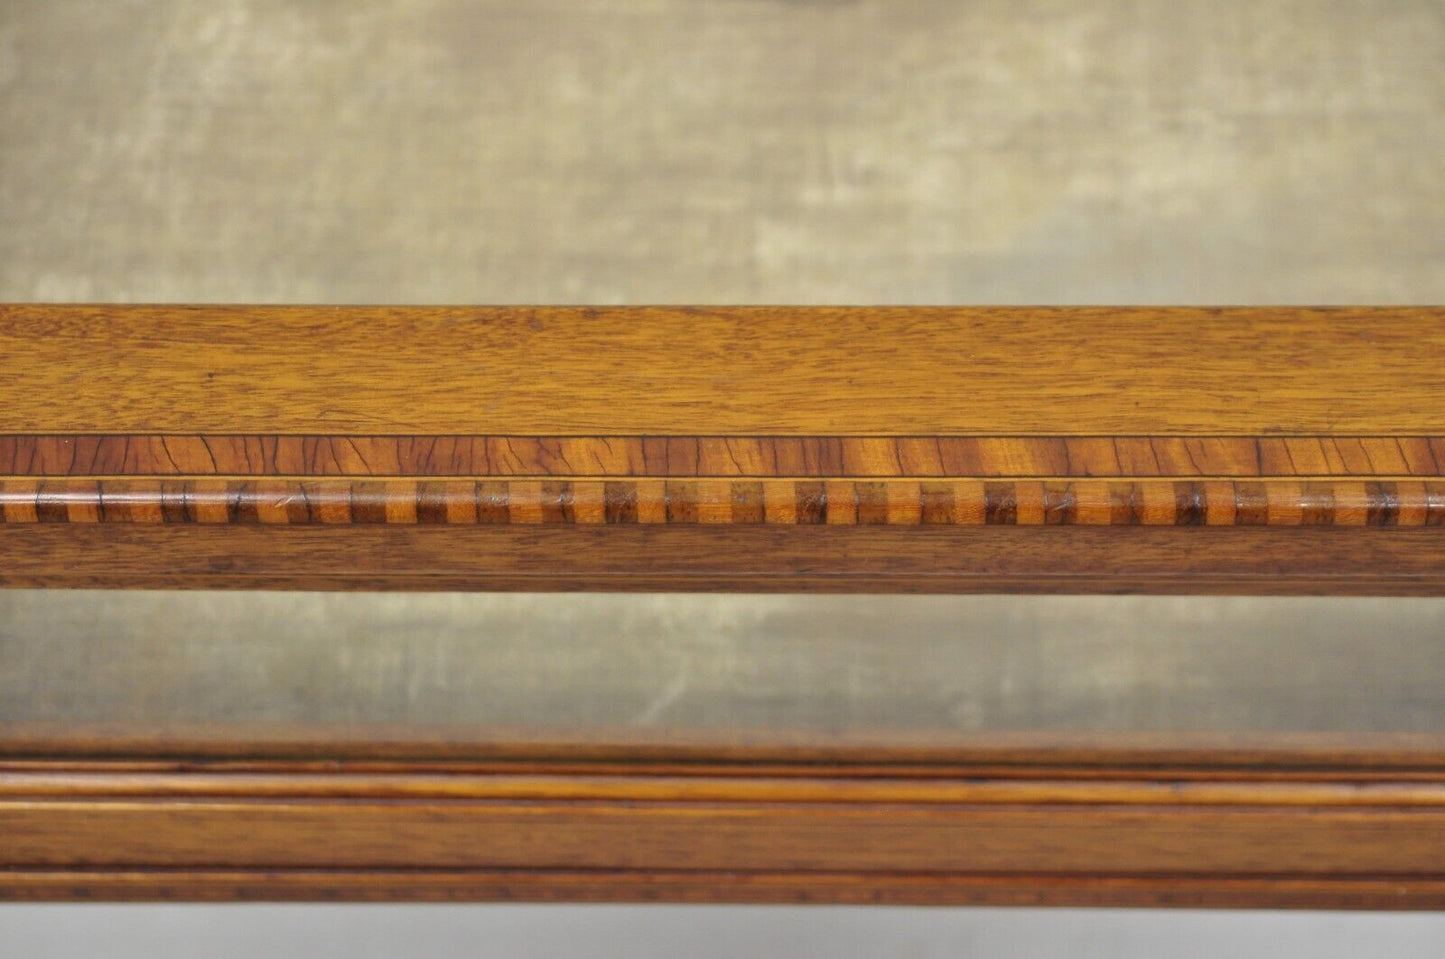 Antique English Edwardian Inlaid Mahogany Small Bijouterie Curio Display Table